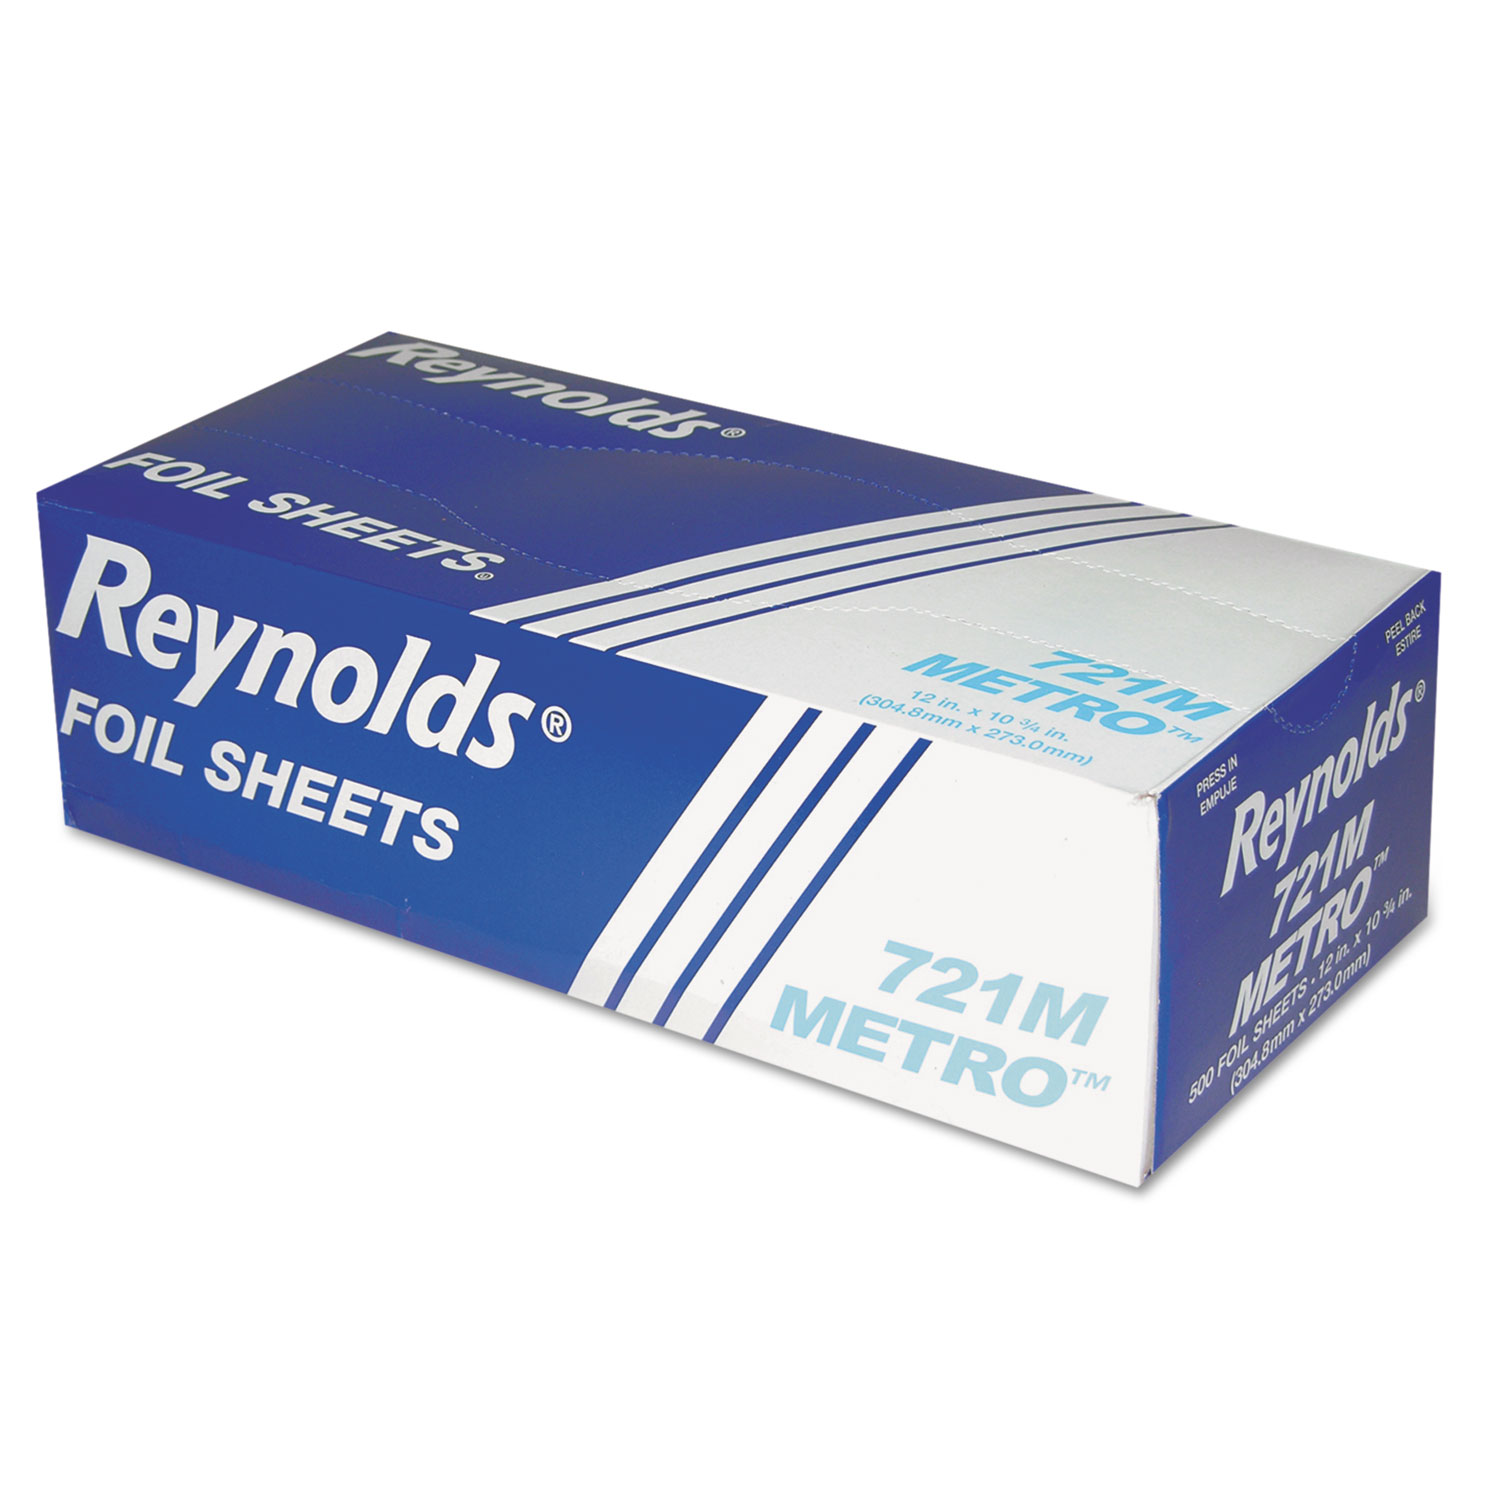  Reynolds Wrap 721M Metro Pop-Up Aluminum Foil Sheets, 12 x 10 3/4, Silver, 500/Box, 6/Carton (RFP721M) 